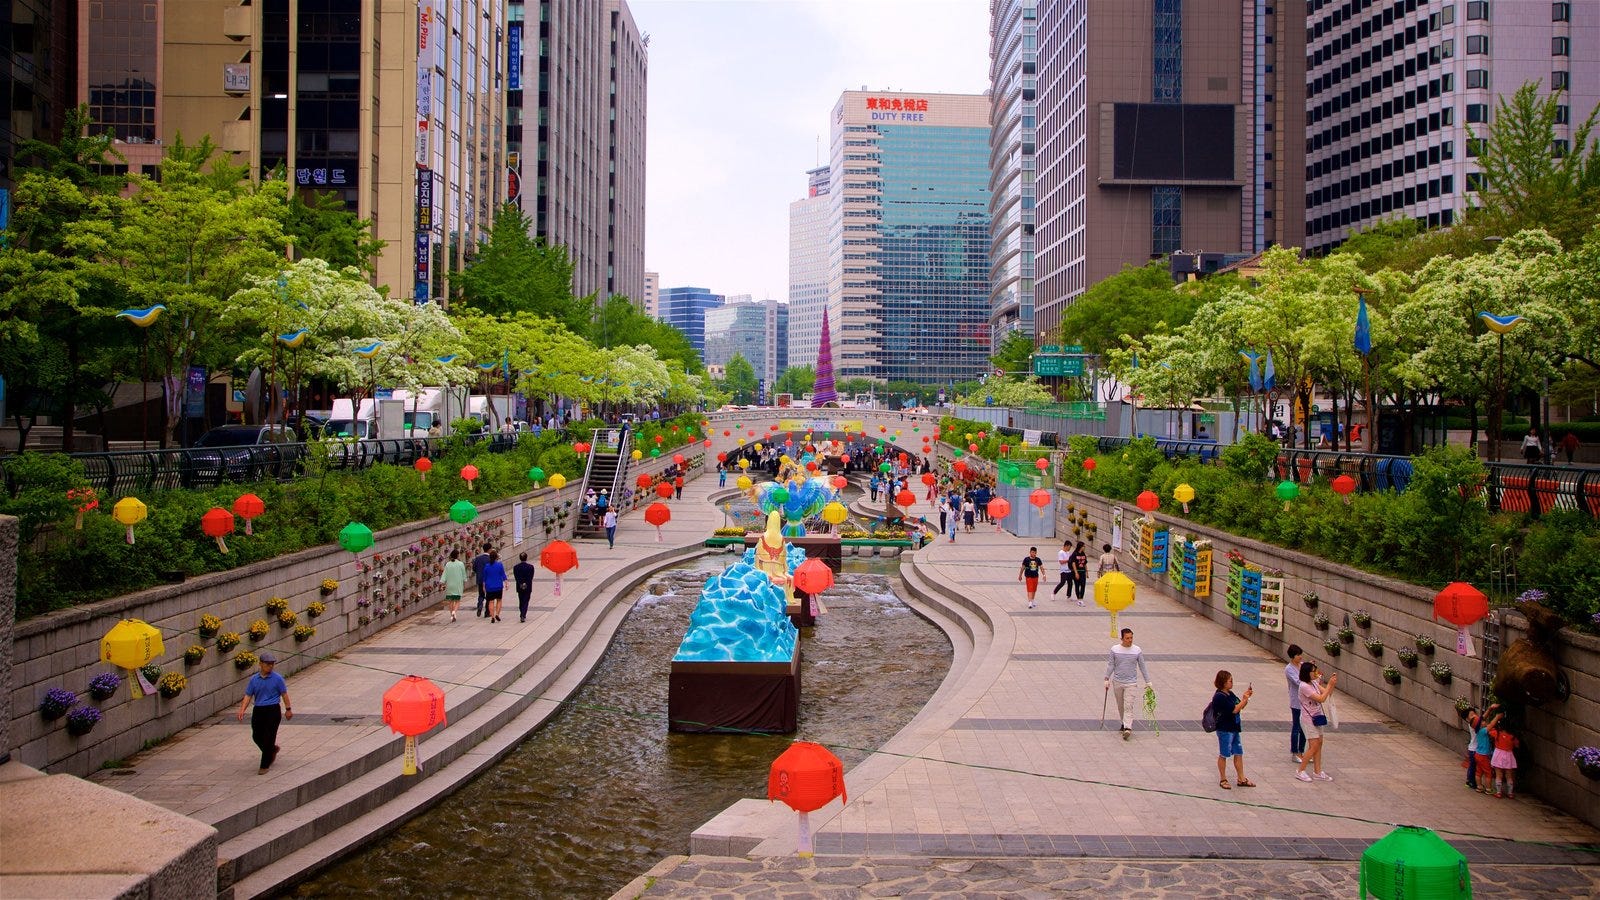 Kumpulan Sketsa Gambar Kota Seoul Aliransket